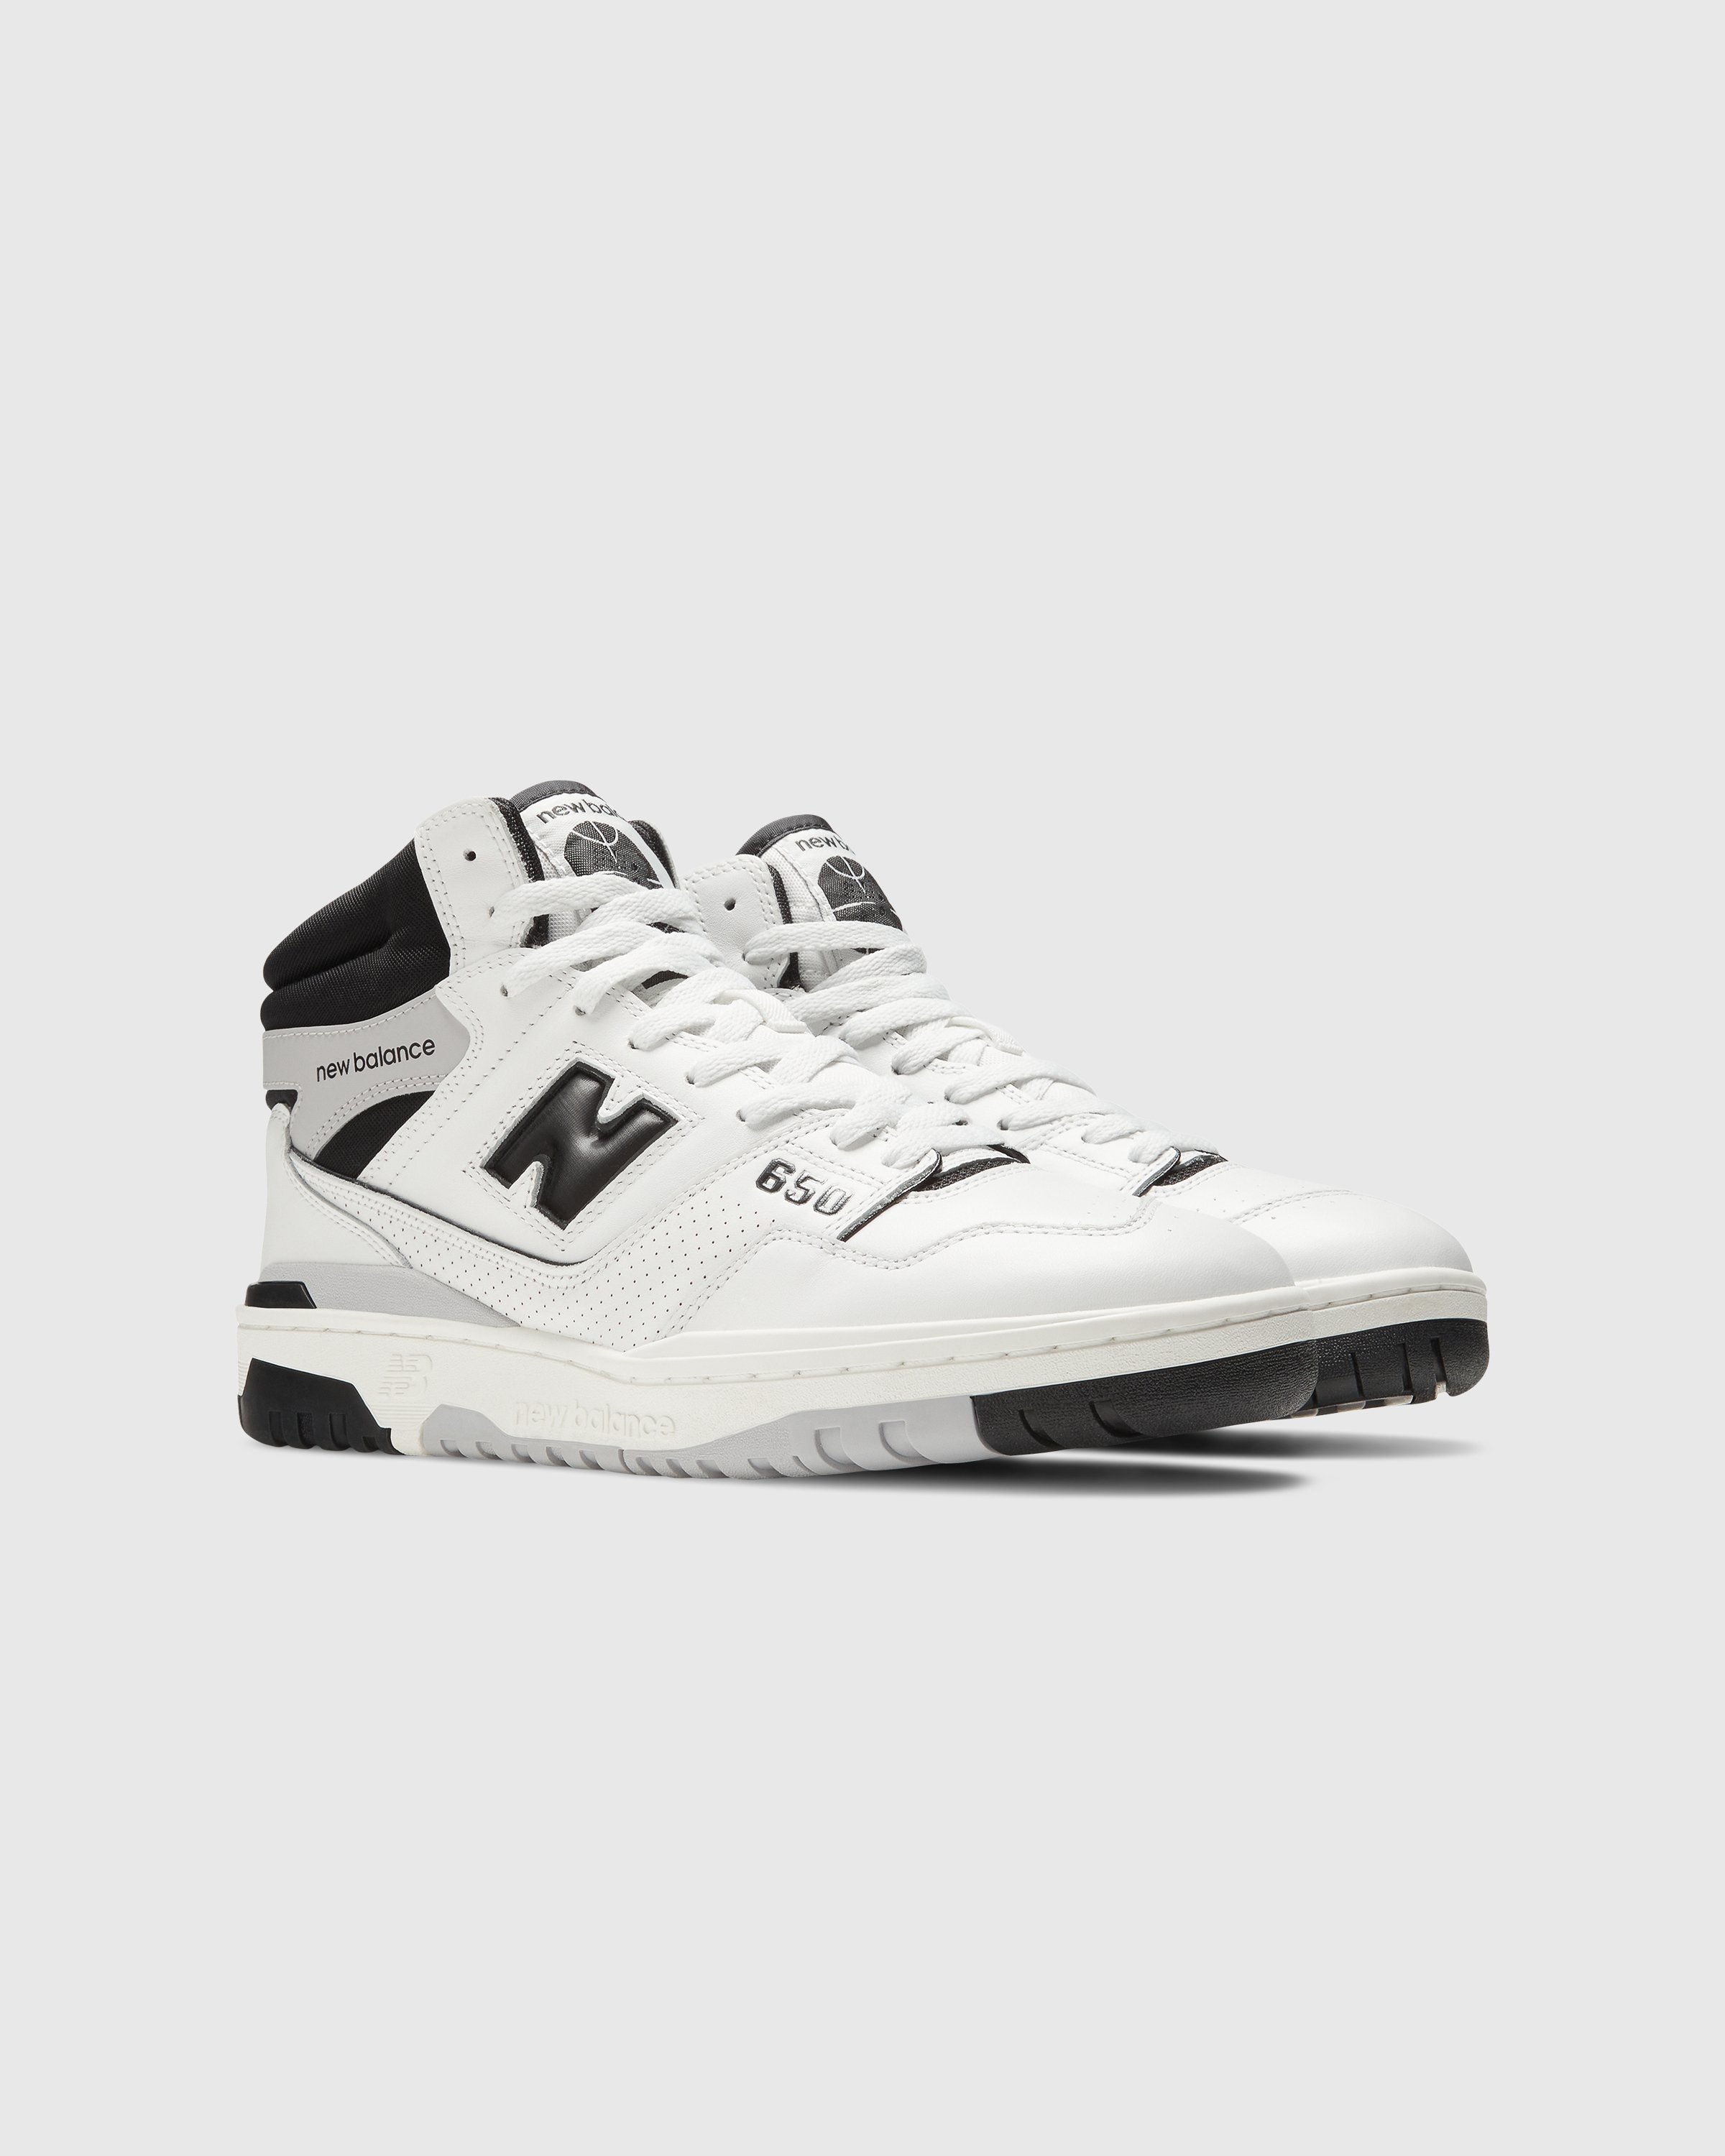 New Balance - BB650RCE White - Footwear - White - Image 3